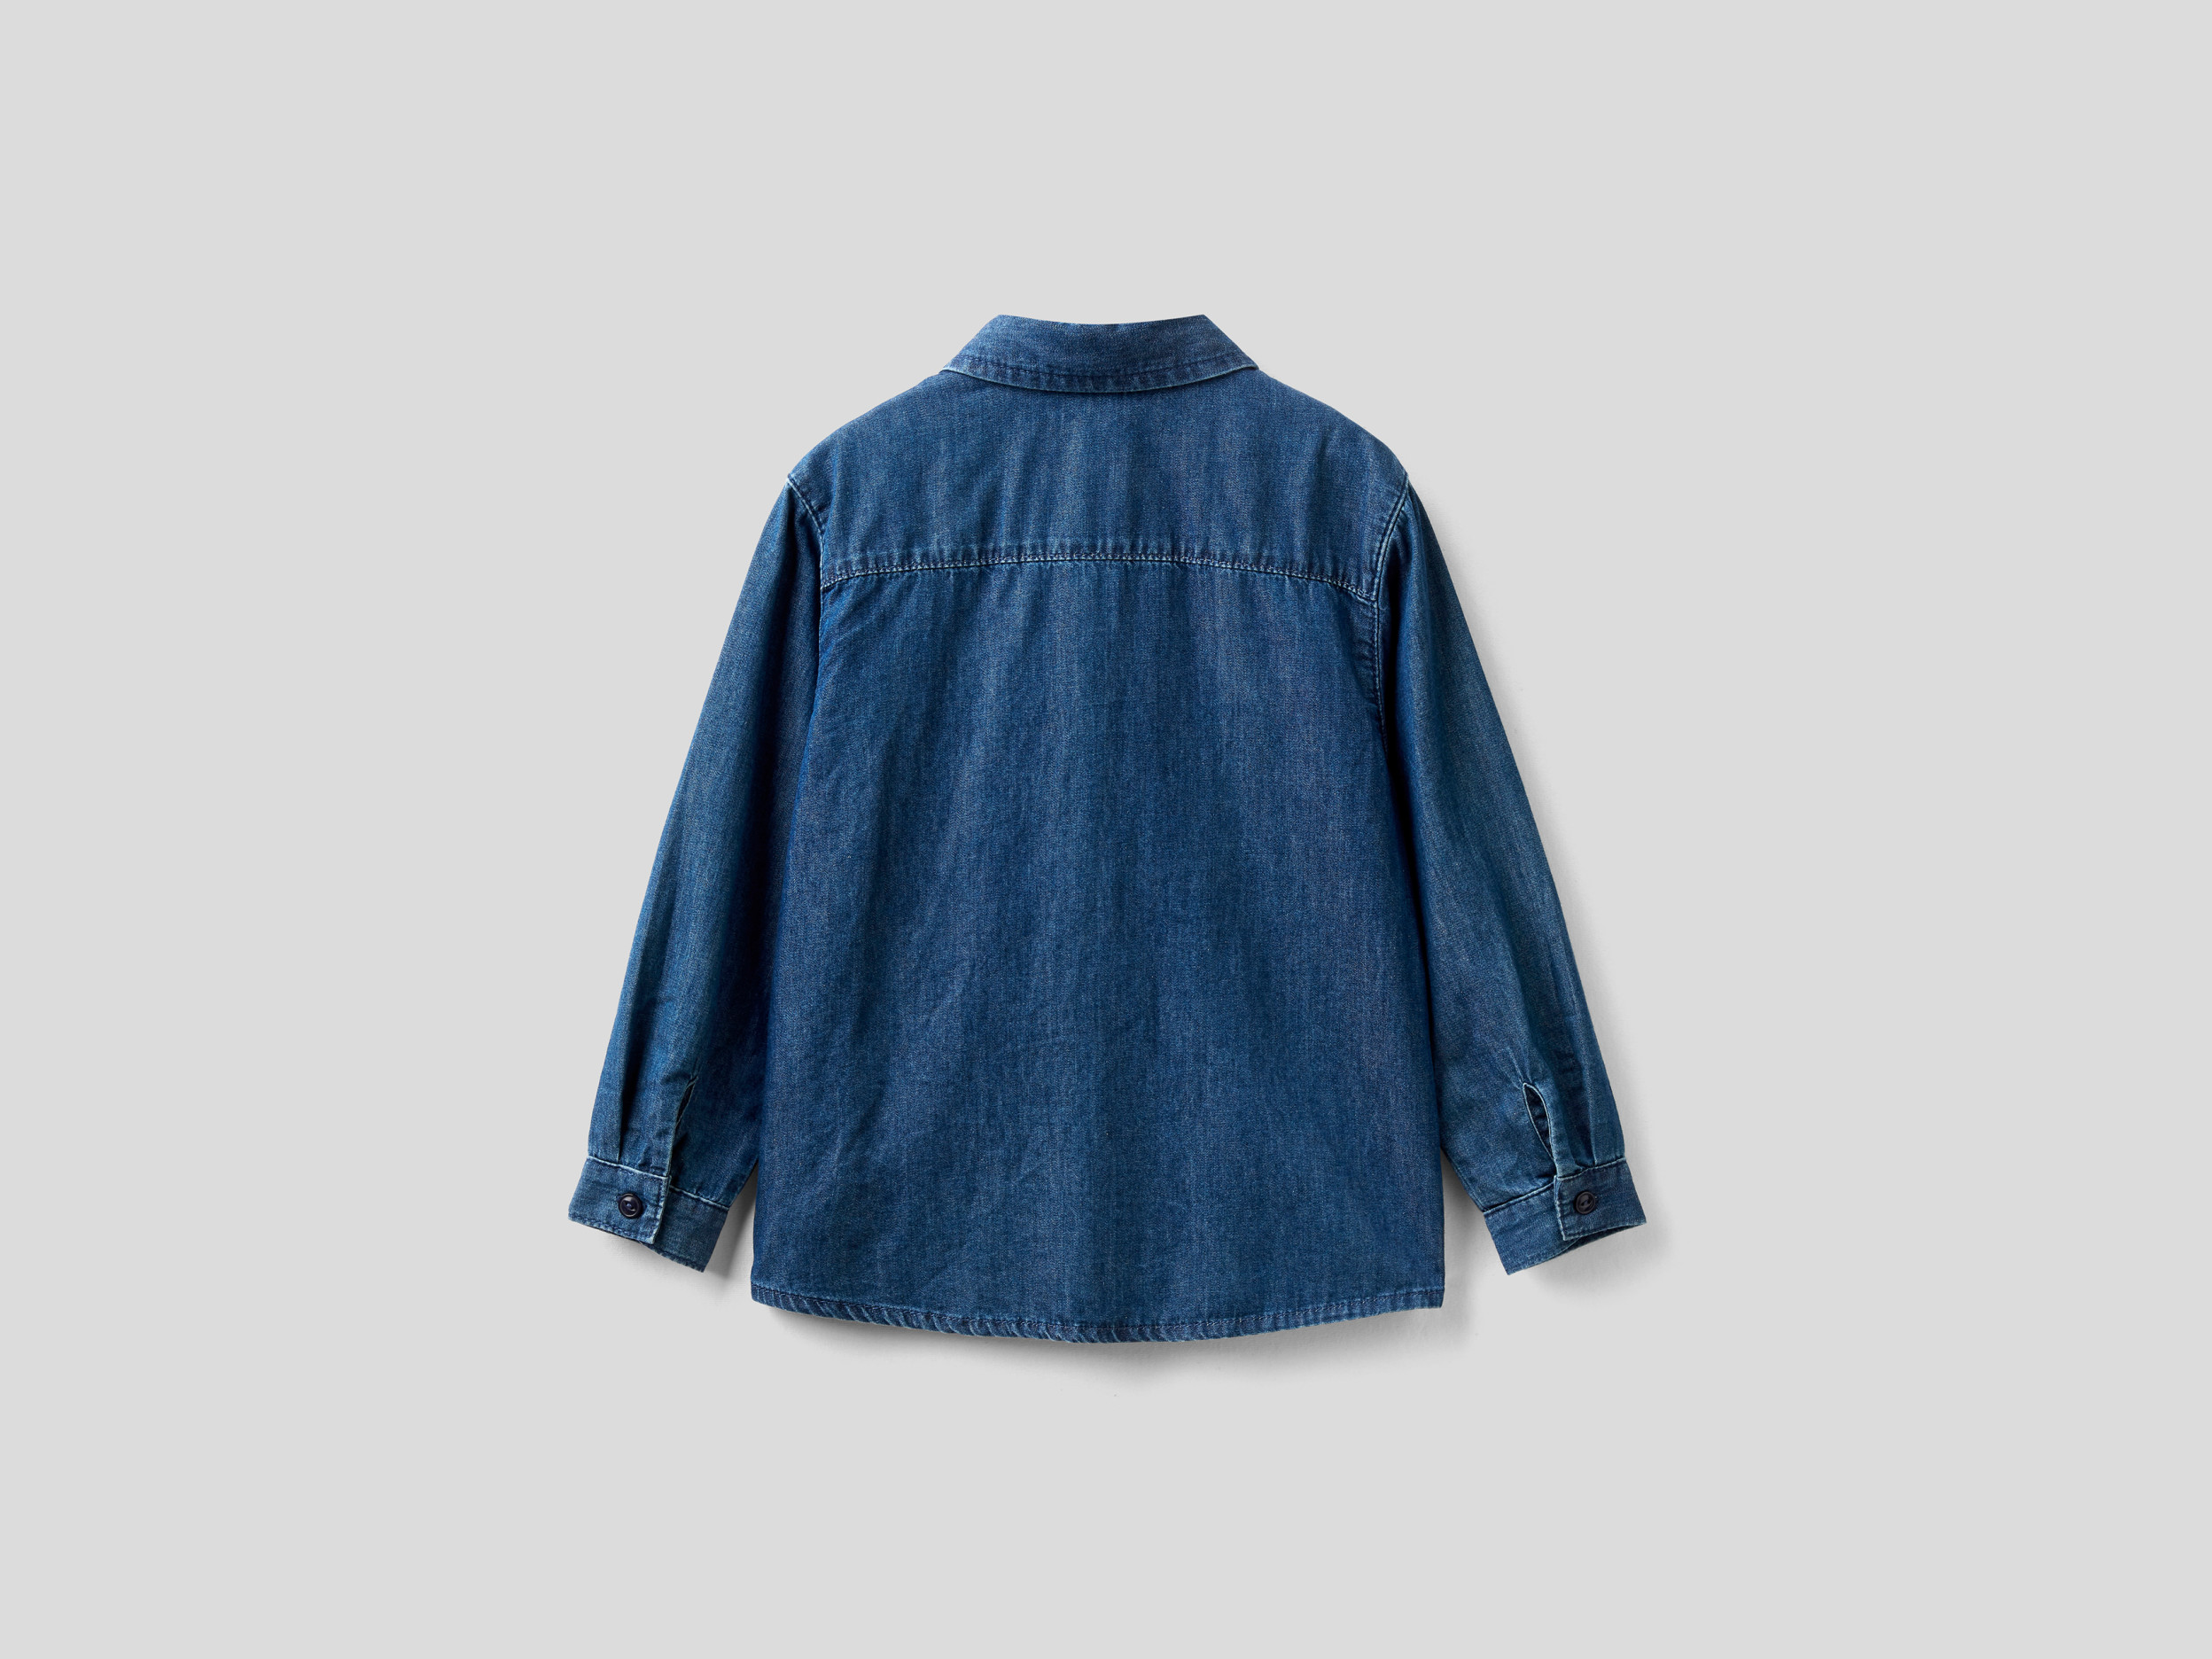 Benetton, Shirt With Printed Pocket, Taglia 12-18, Blue, Kids